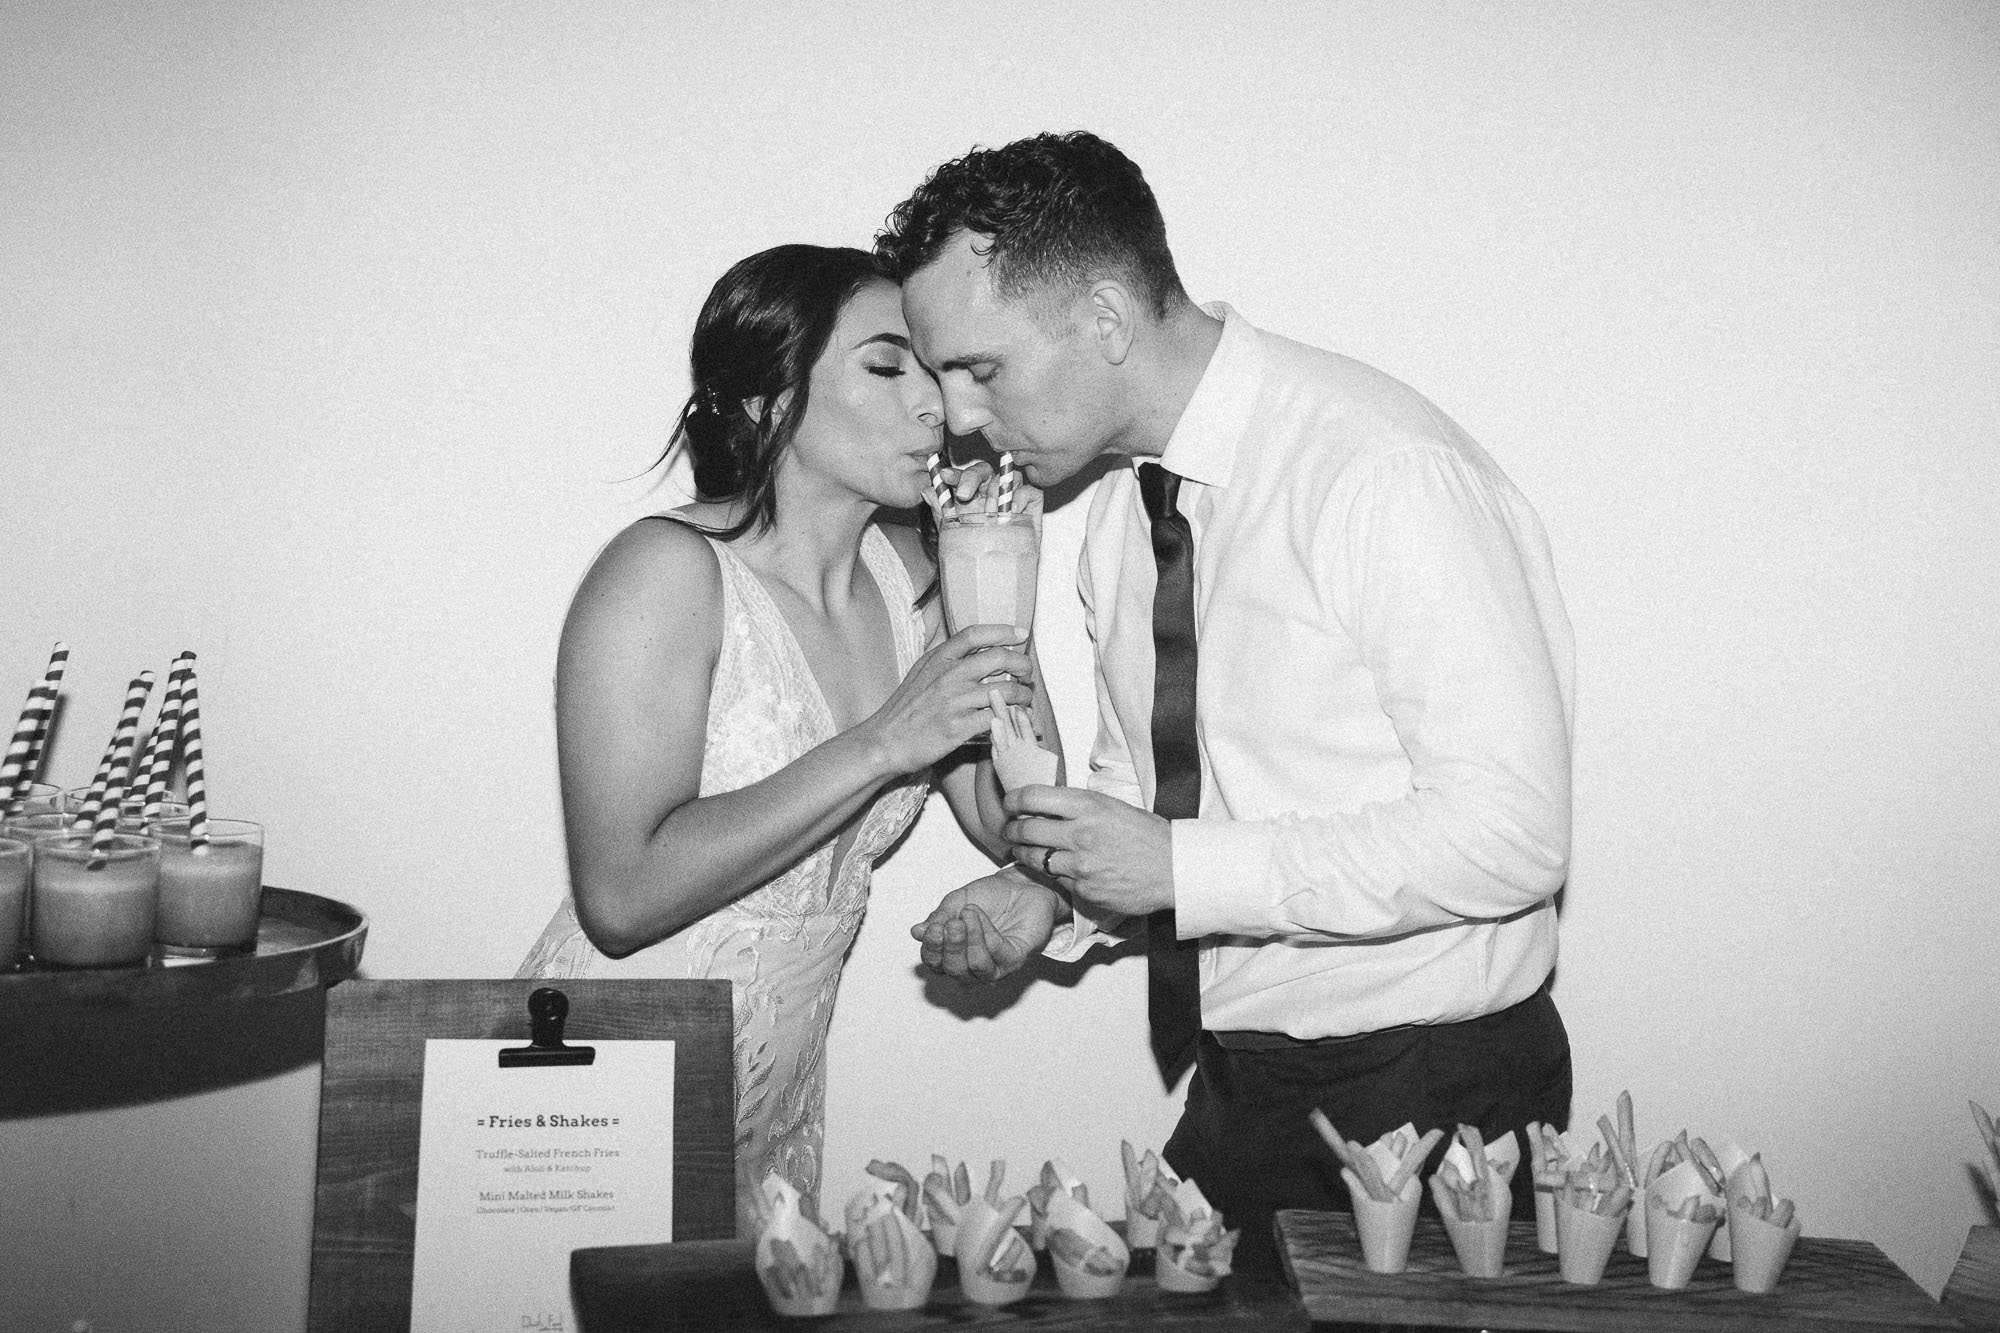 bride and groom share a milkshake during wedding reception at ironlight wedding venue in lake oswego, oregon